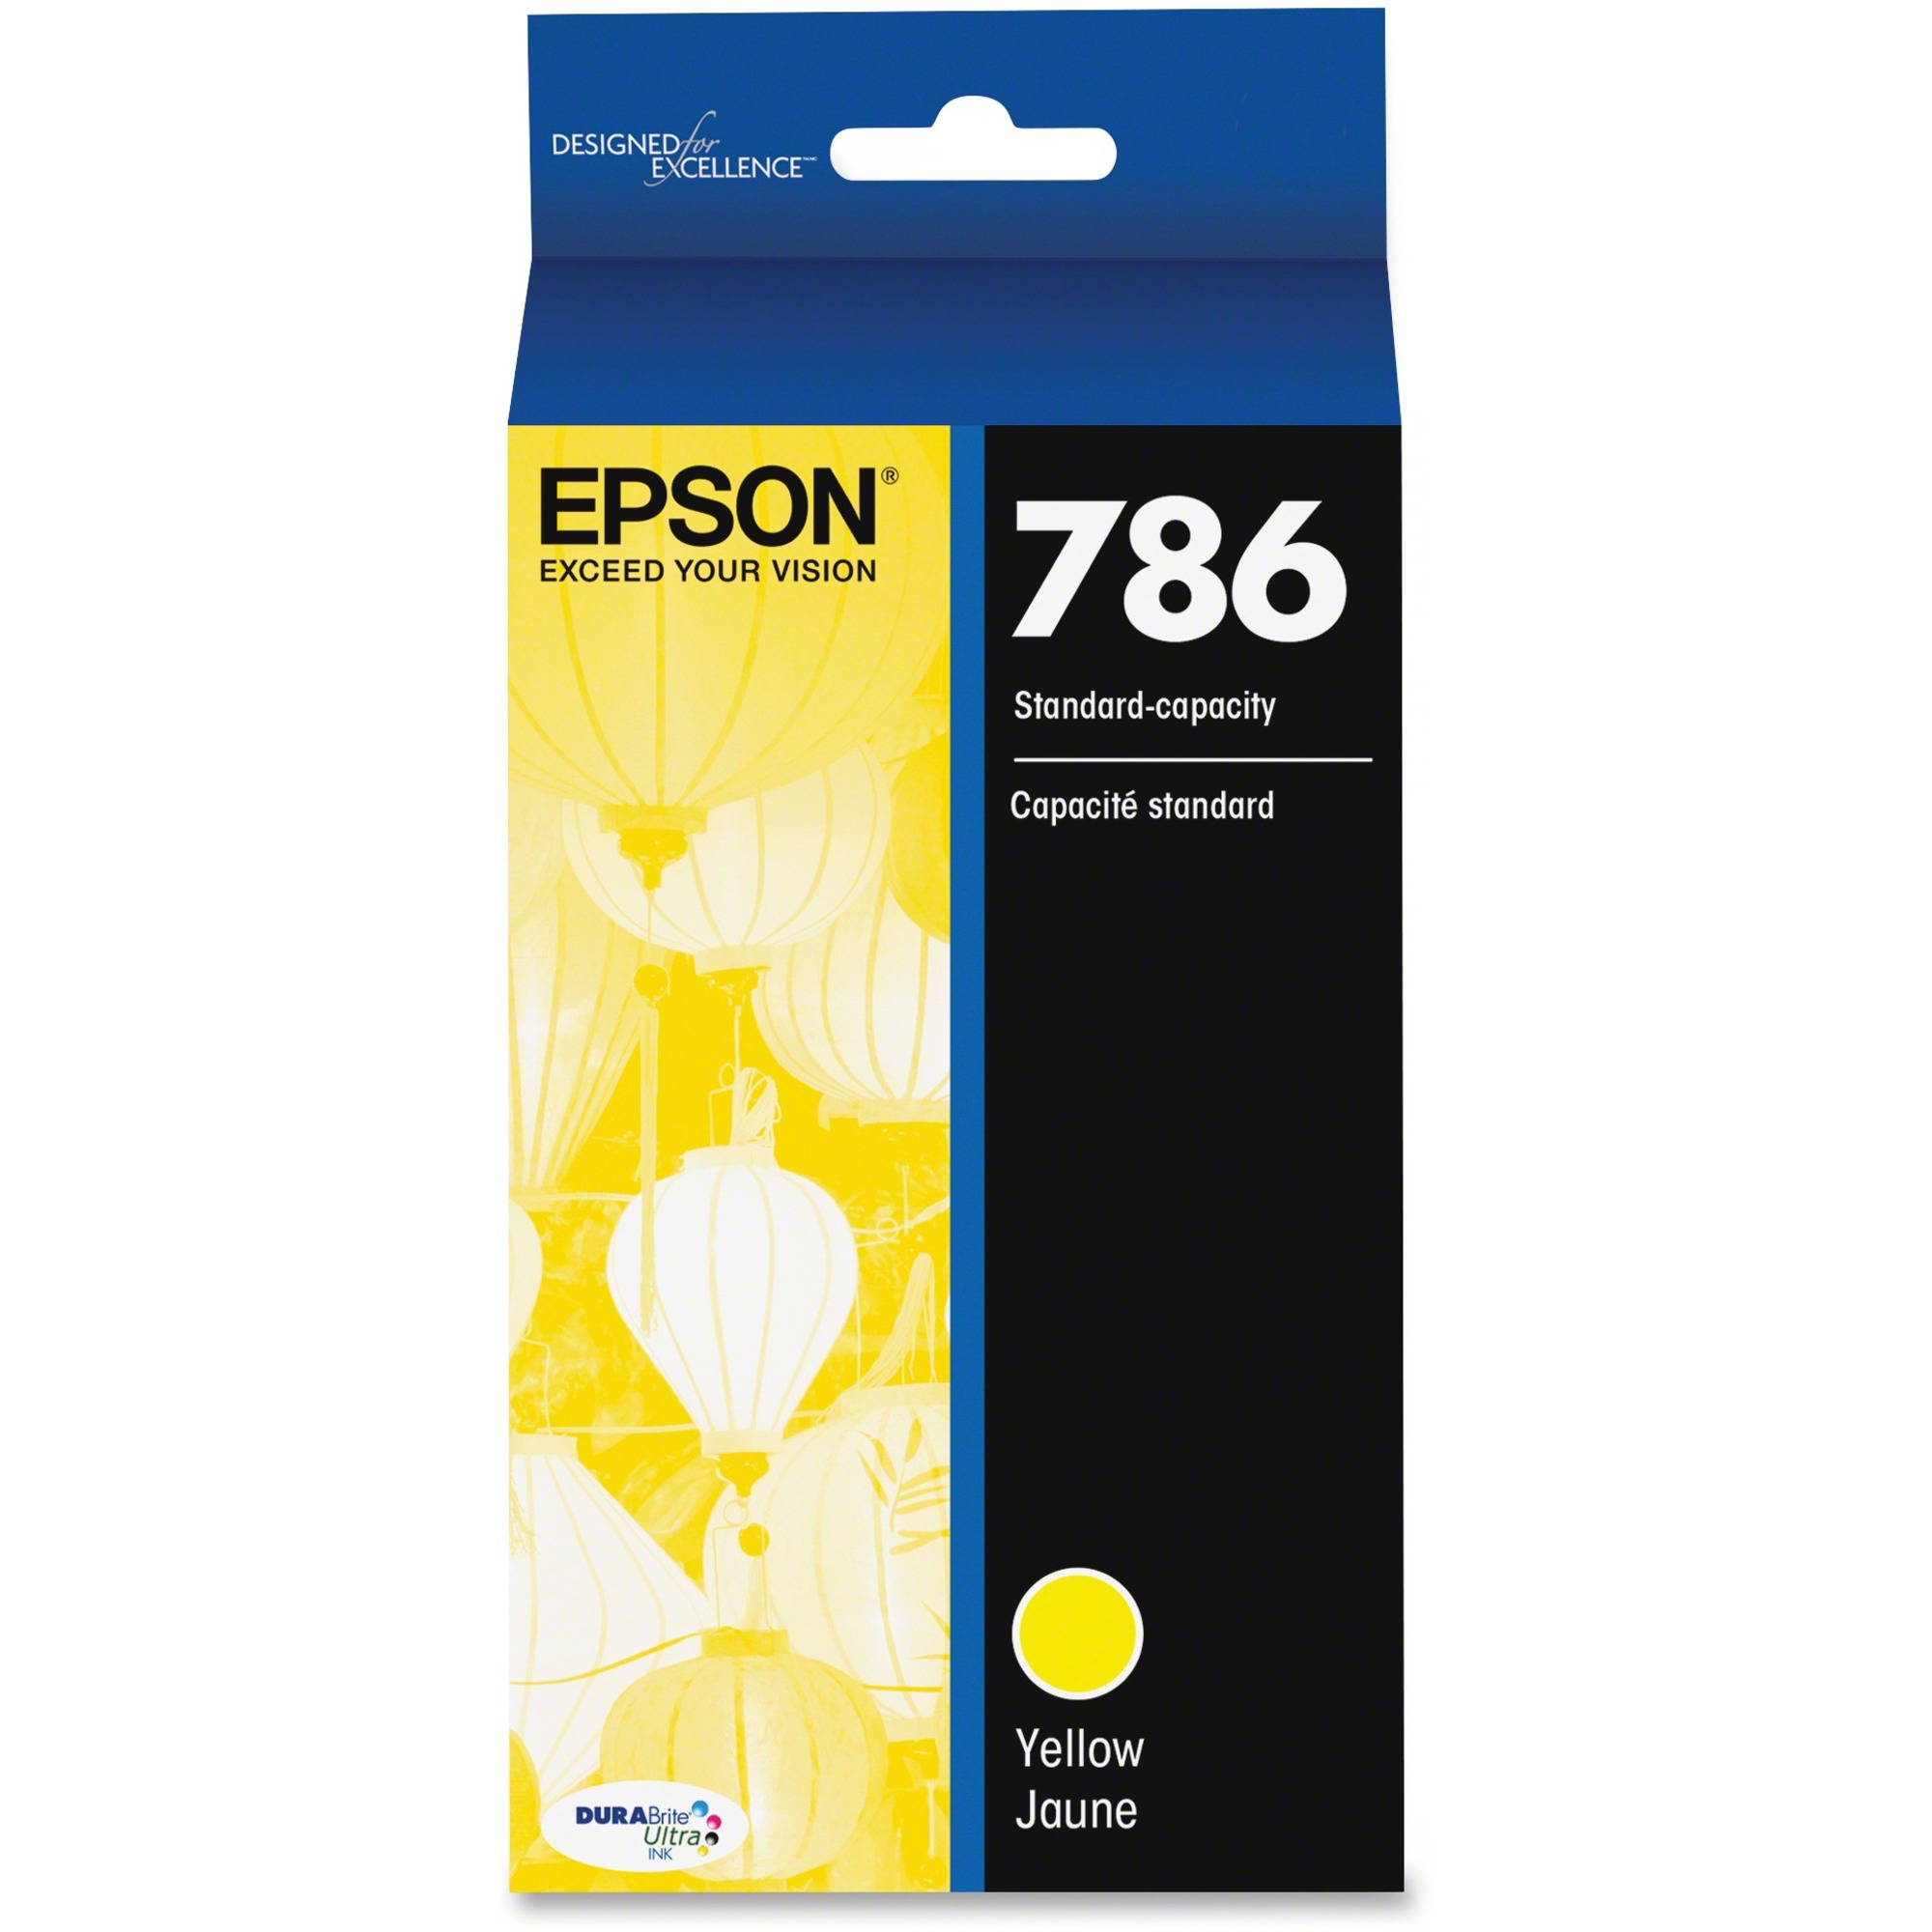 Epson Durabrite Ultra 786 Original Inkjet Ink Cartridge Yellow 1 Each 8573